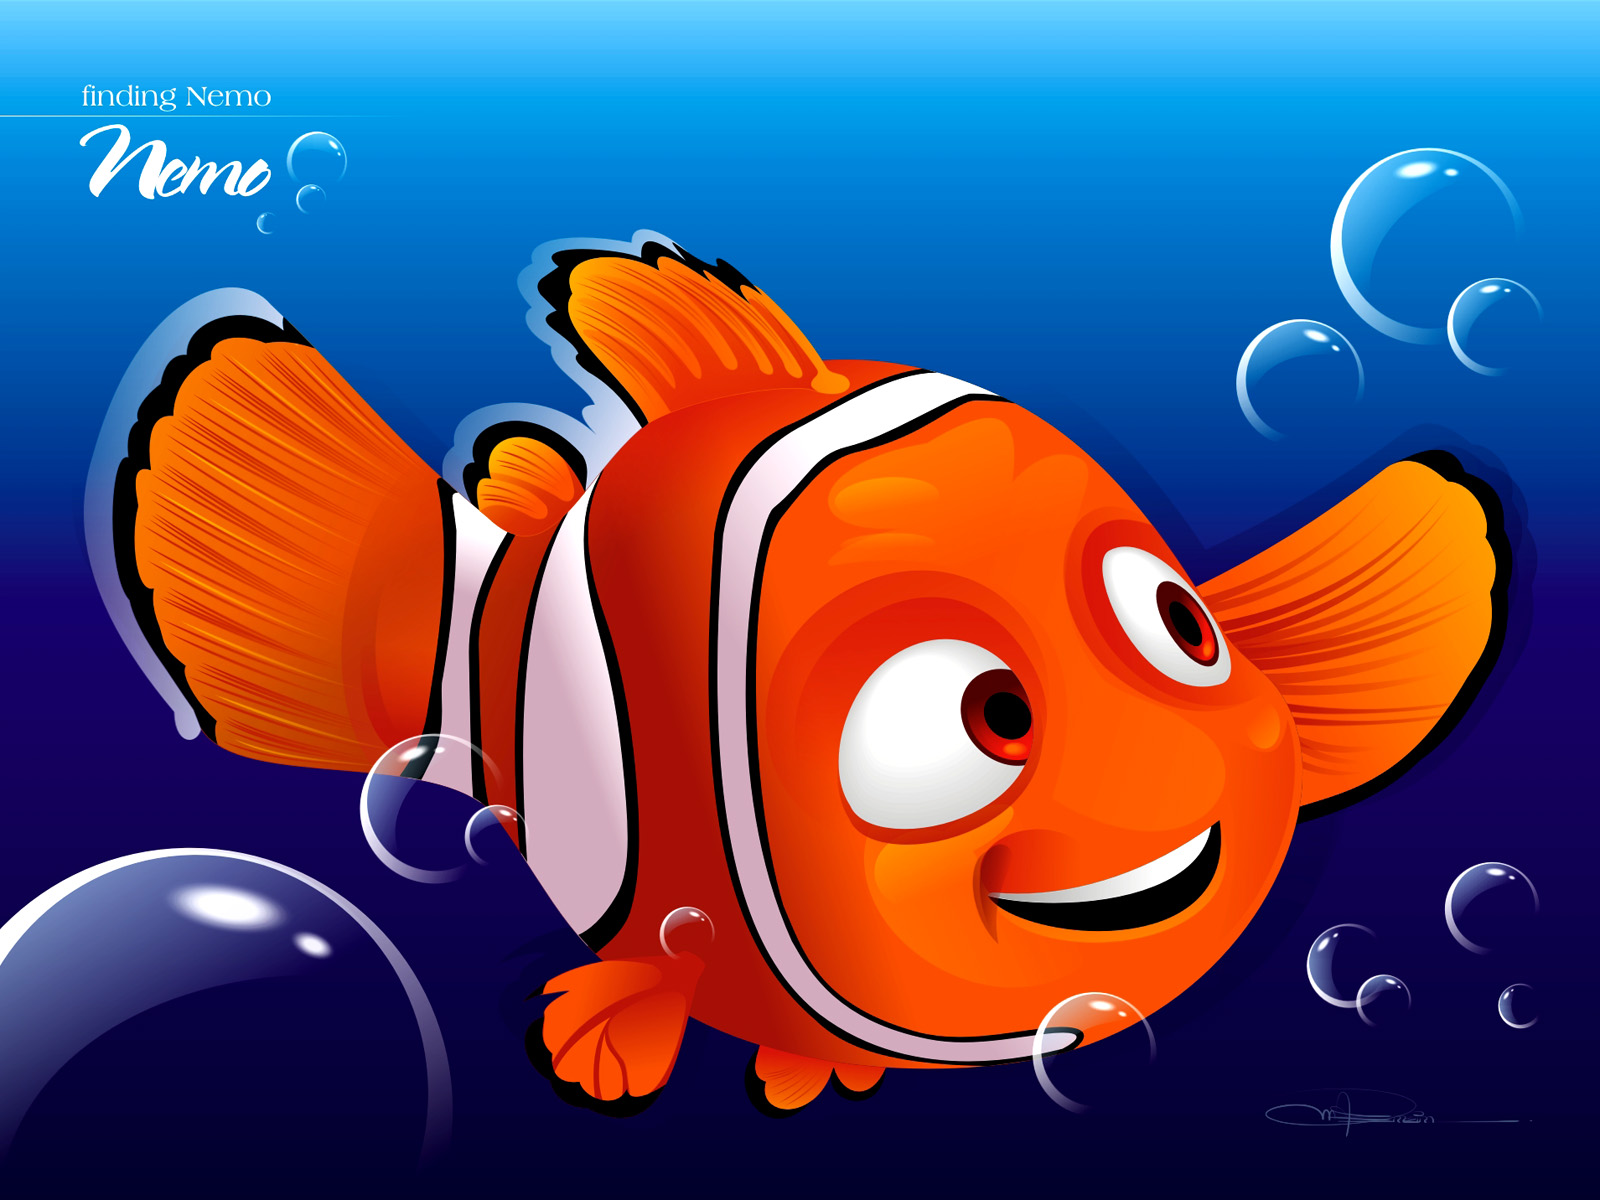 Finding Nemo - Movie Wallpapers | Wallpaper Send!